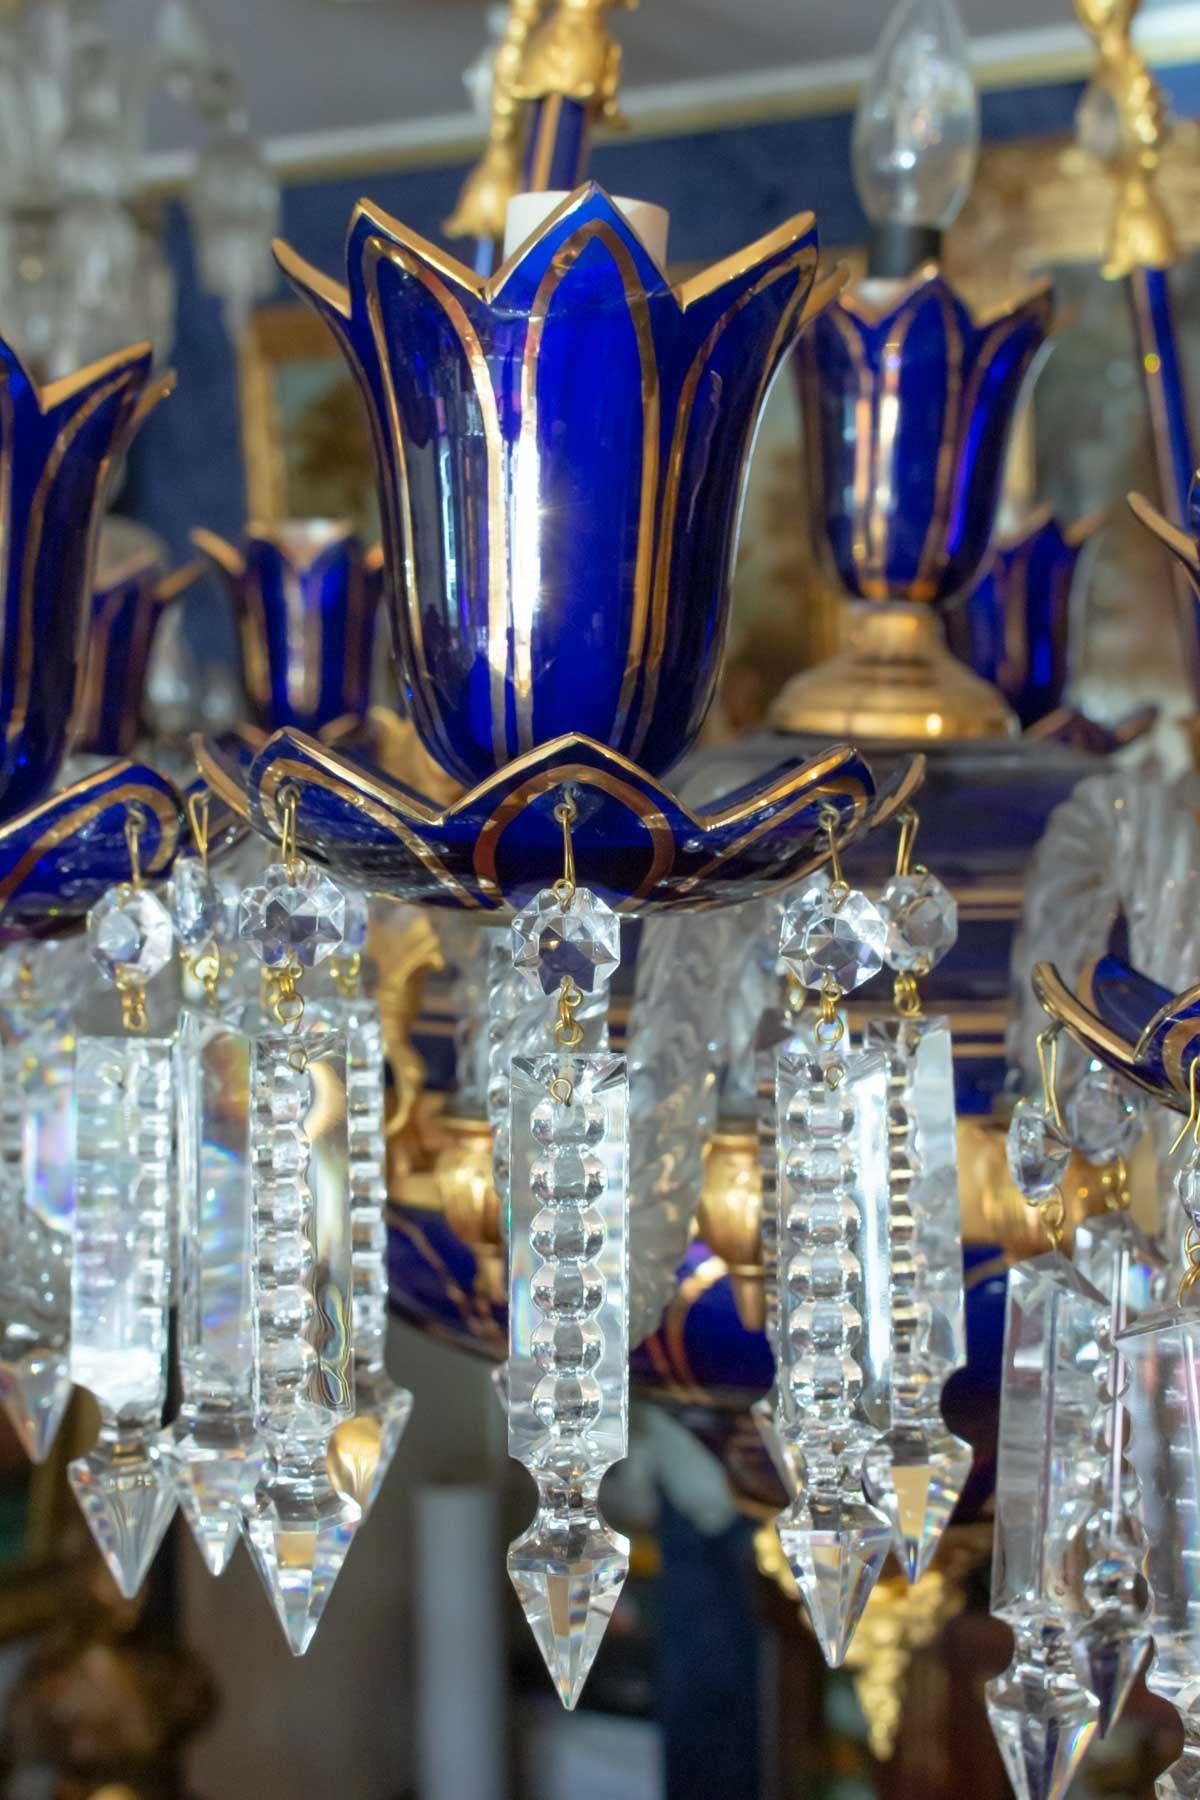 Gilt Pair of Blue Crystal Chandeliers, 18 Lights, Italian Work